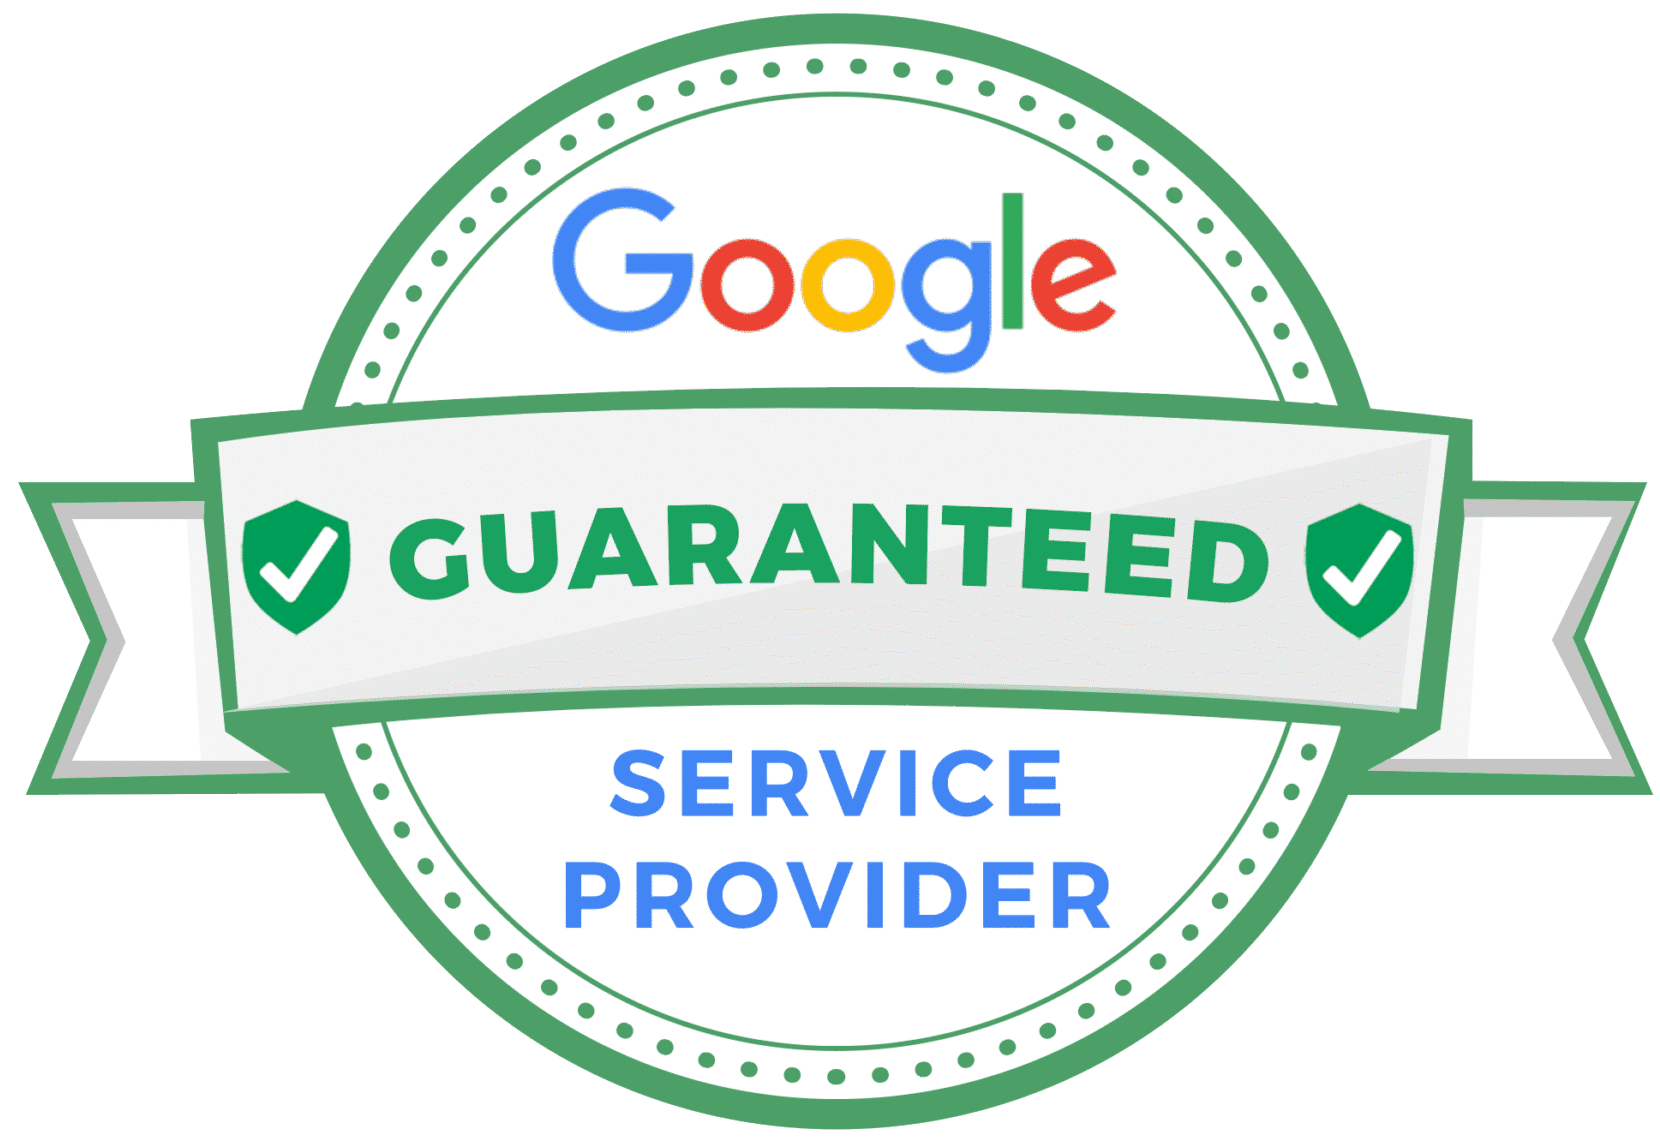 Google Guaranteed Agency